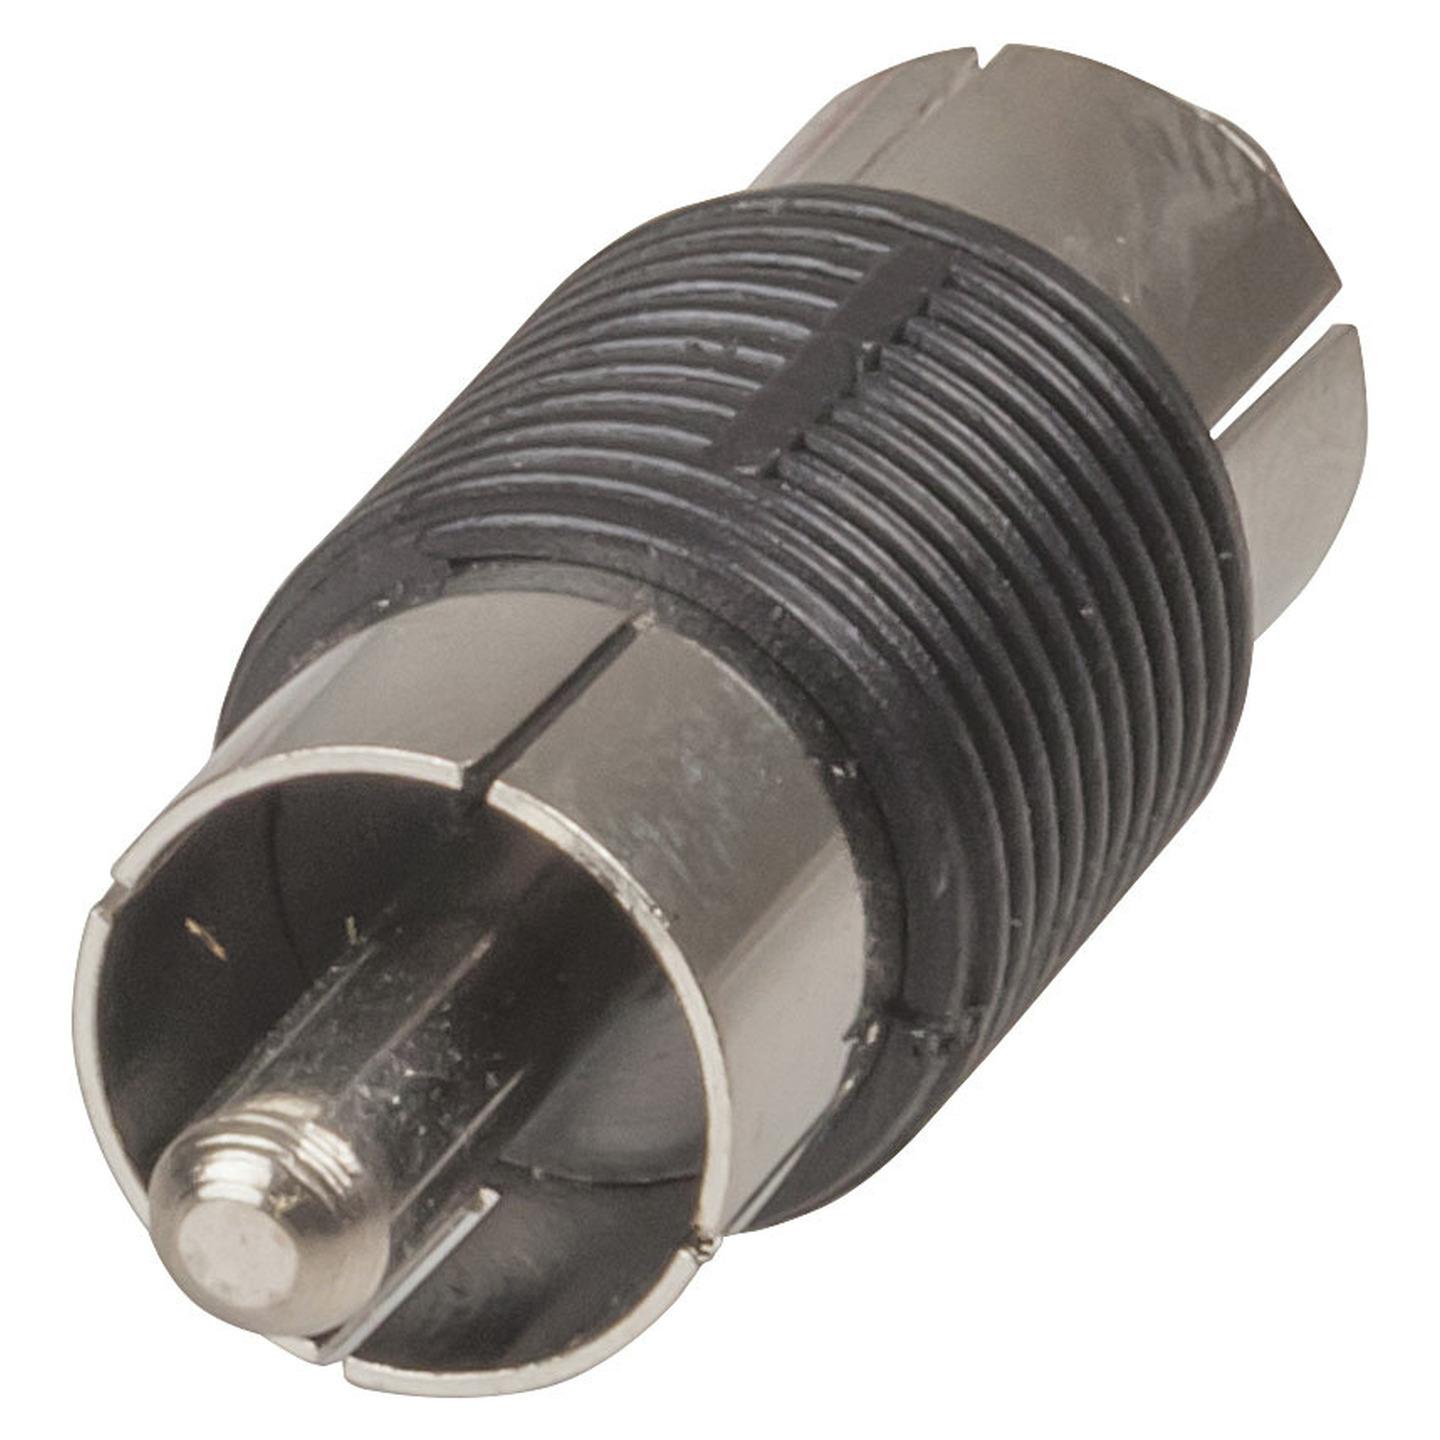 RCA Plug to RCA Plug Adaptor